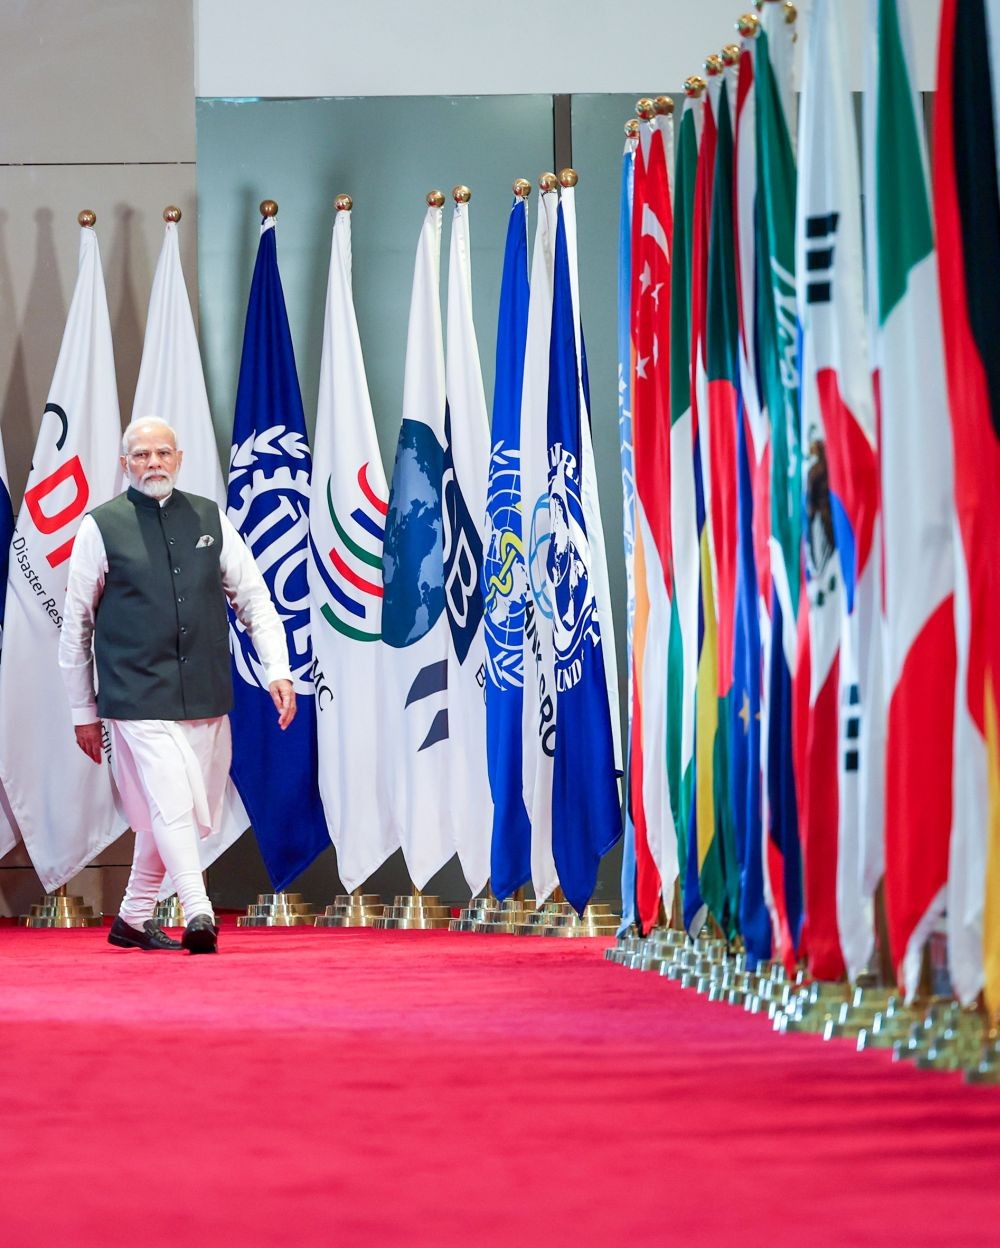 New Delhi : Prime Minister Narendra Modi arrives at the Bharat Madapam for the G20 Summit, in New Delhi on Saturday, September 9, 2023. (Photo: IANS/PIB)